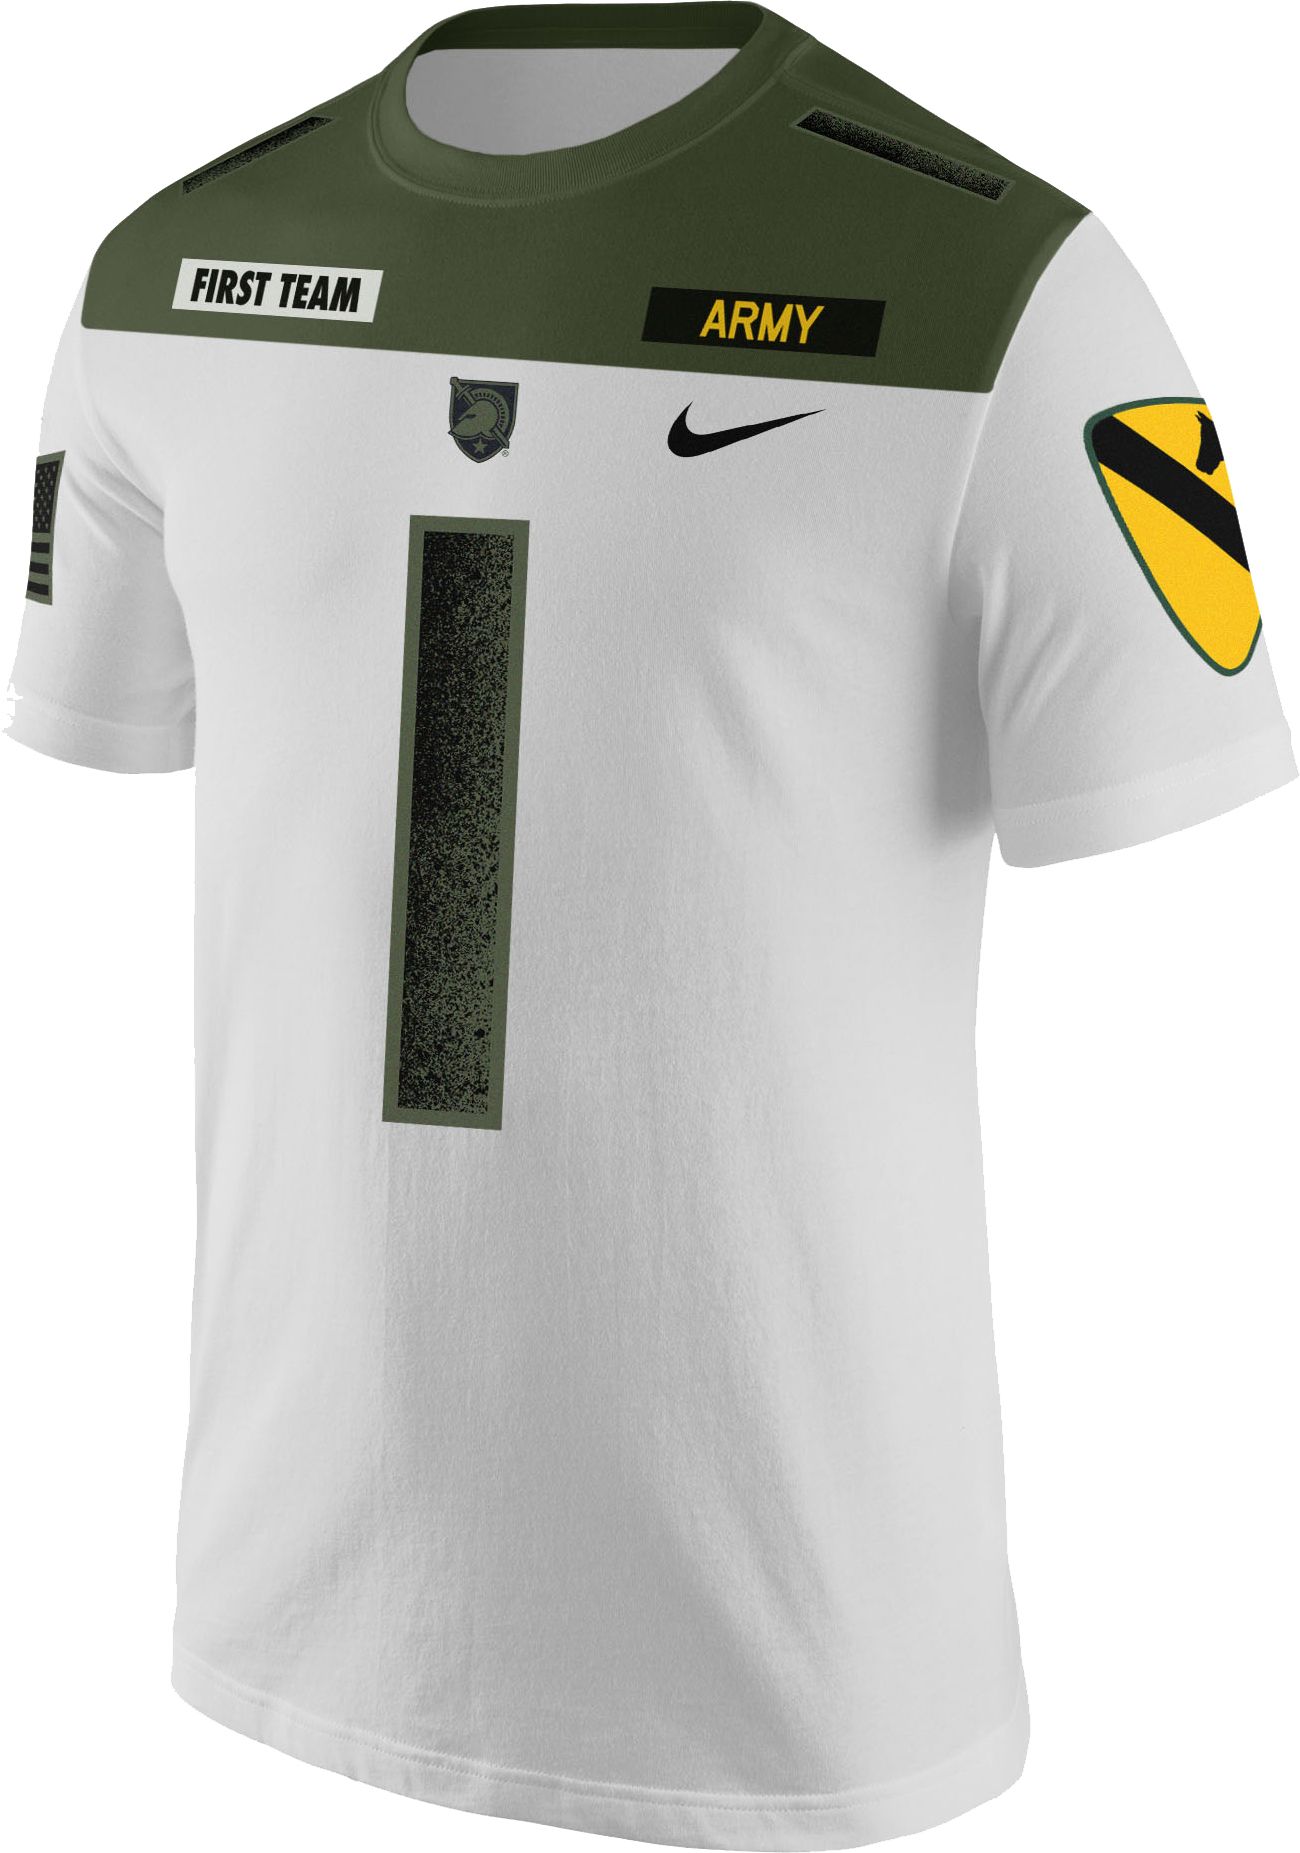 army football team store